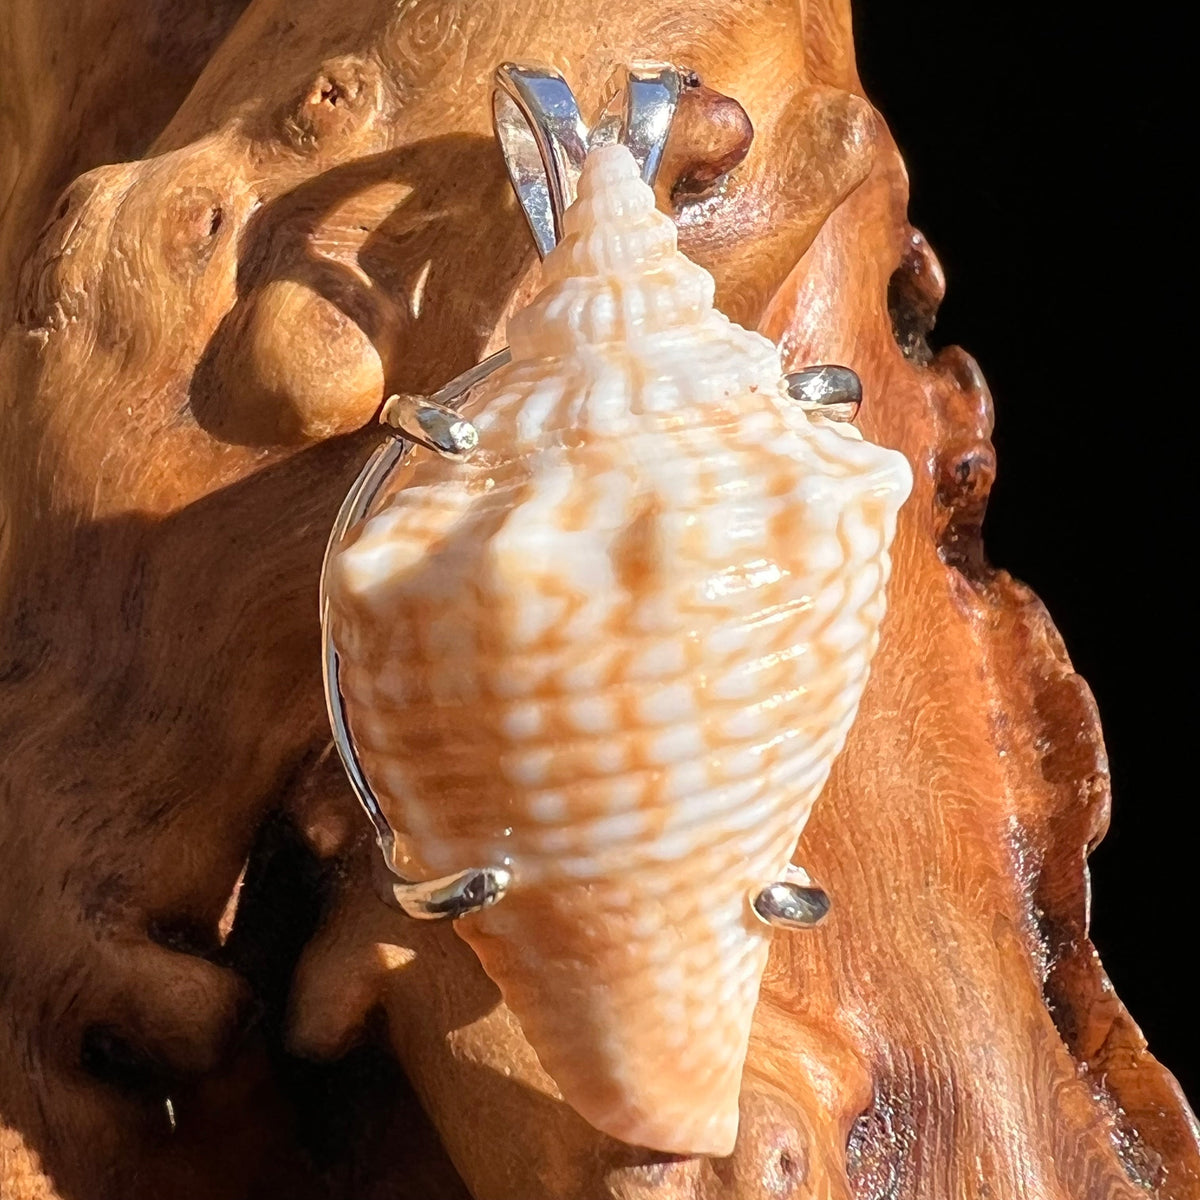 Shell Pendant Sterling Silver Natural Seashell #3463-Moldavite Life